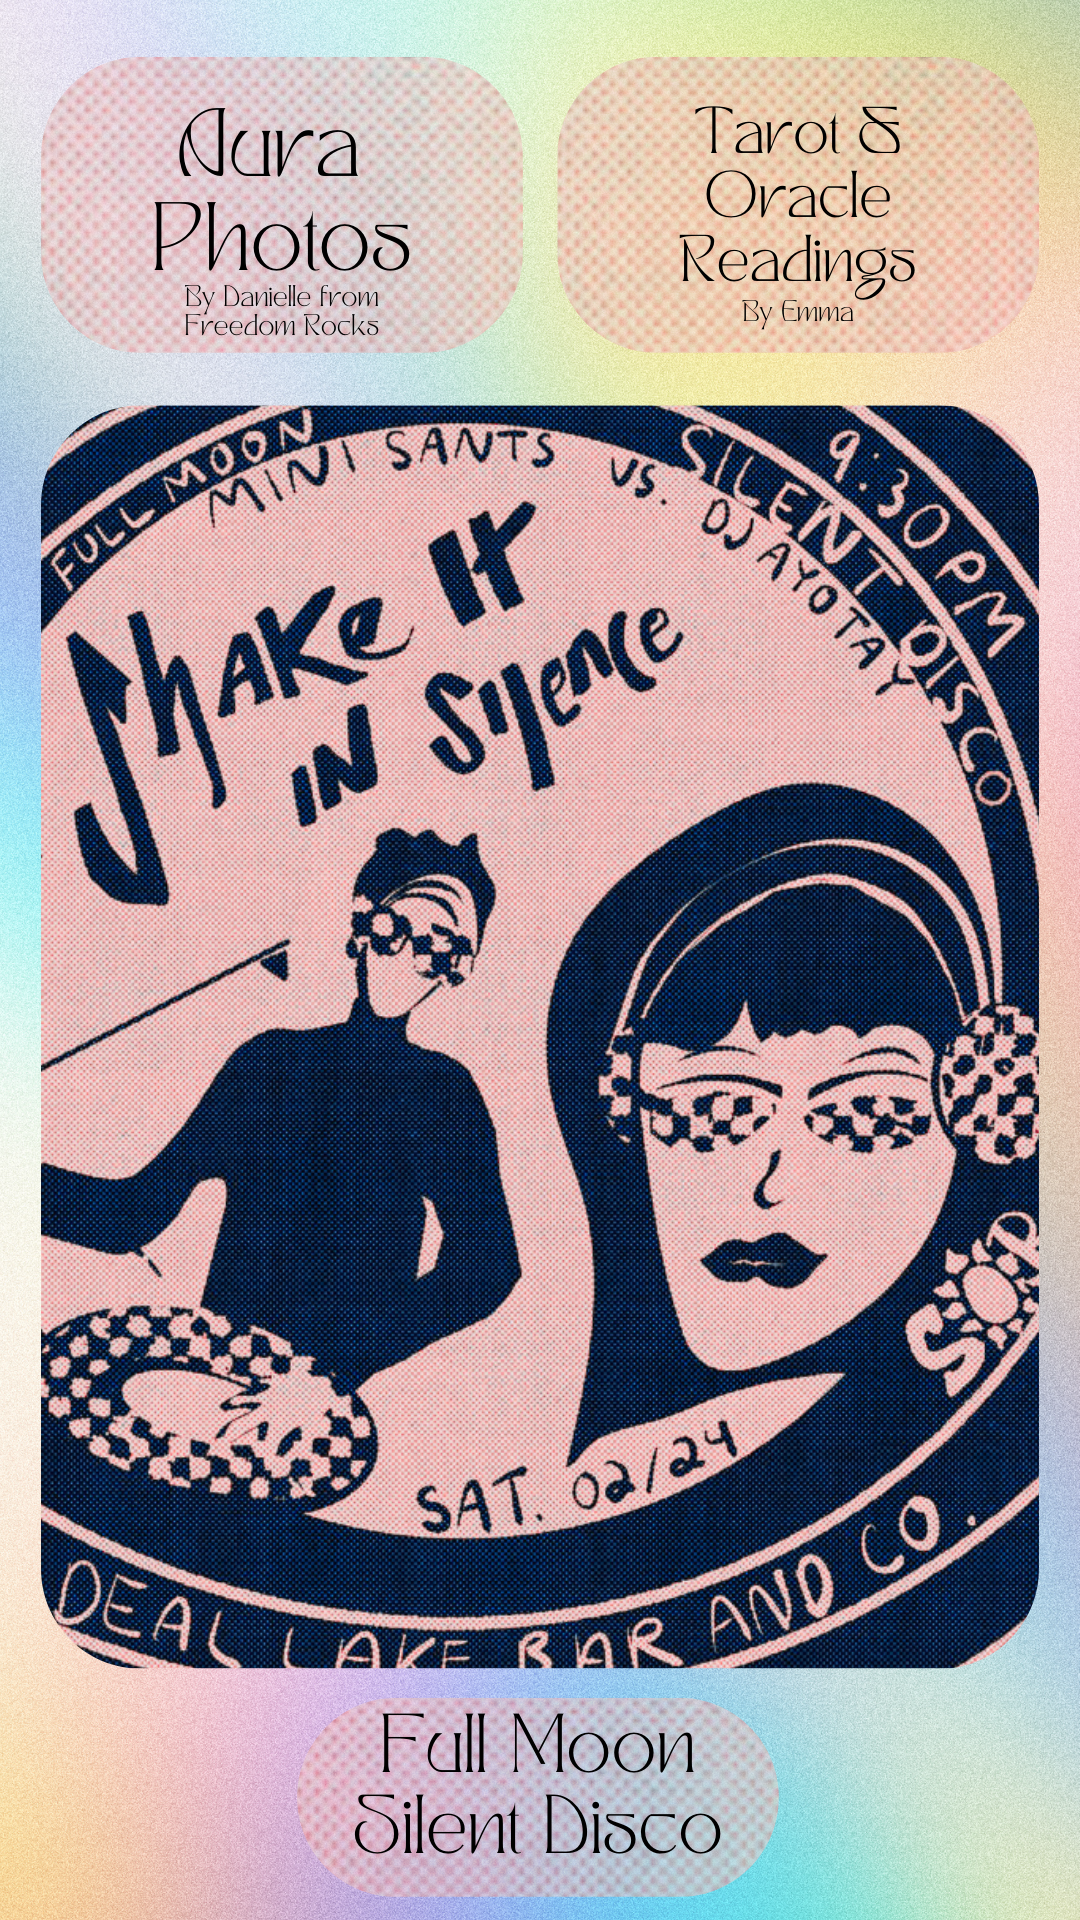 Shake It In Silence ~ Deal Lake Bar + Co Poster